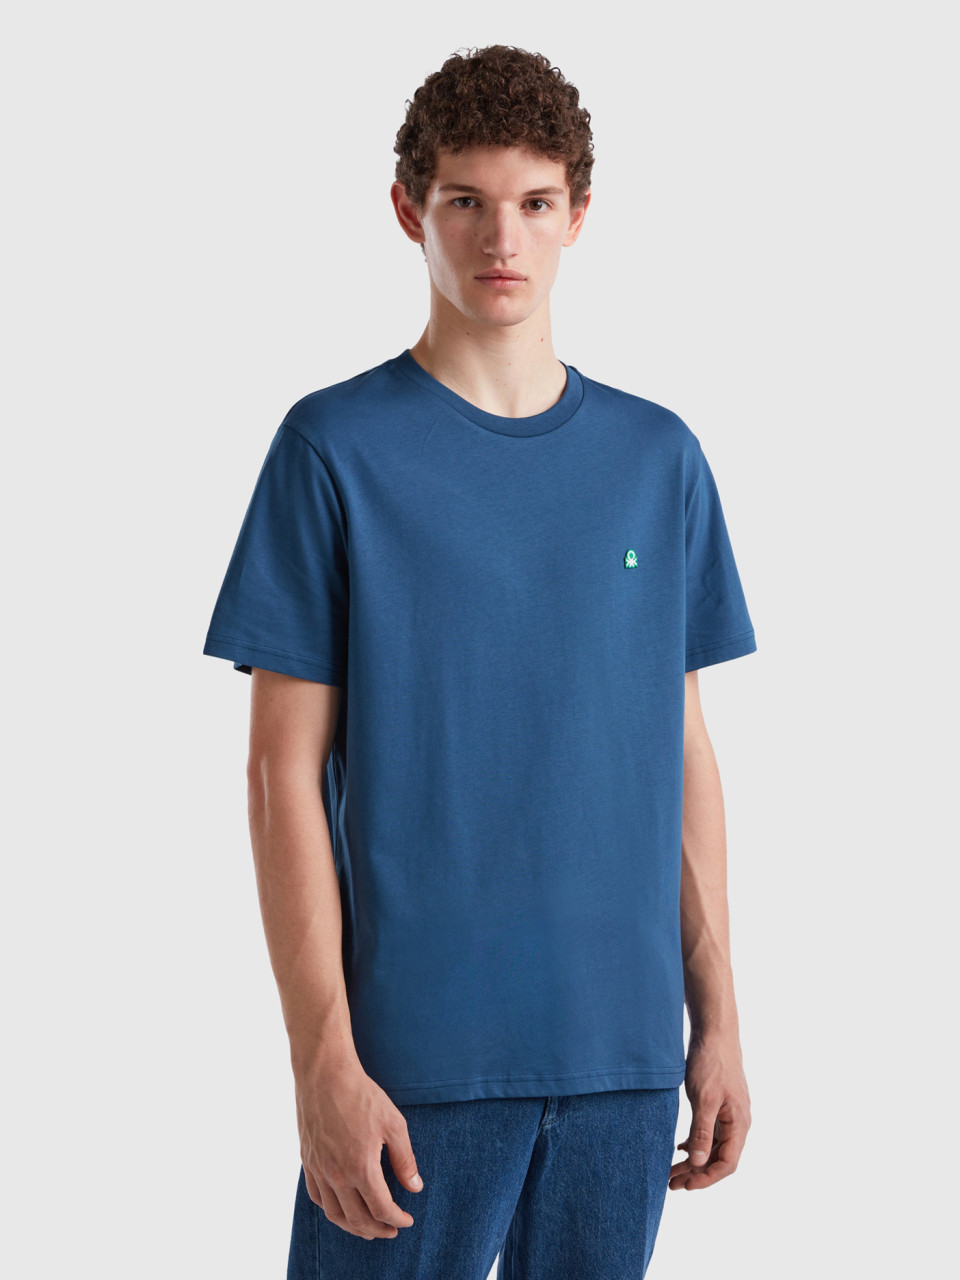 Benetton, 100% Organic Cotton Basic T-shirt, Air Force Blue, Men